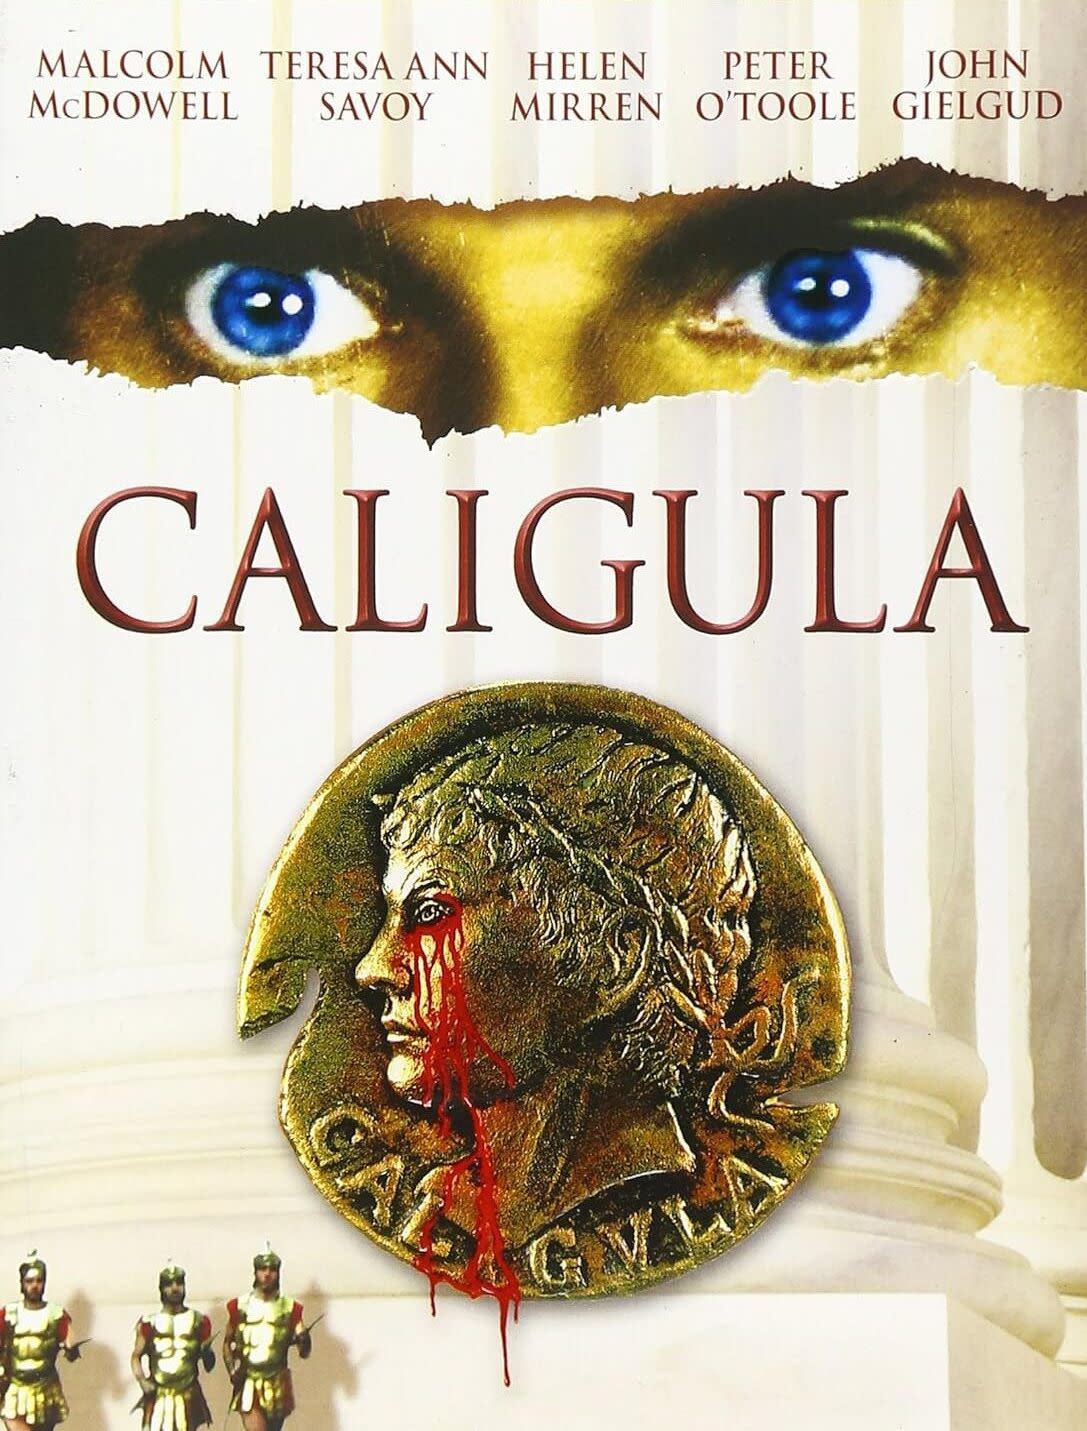 Caligula, 1979